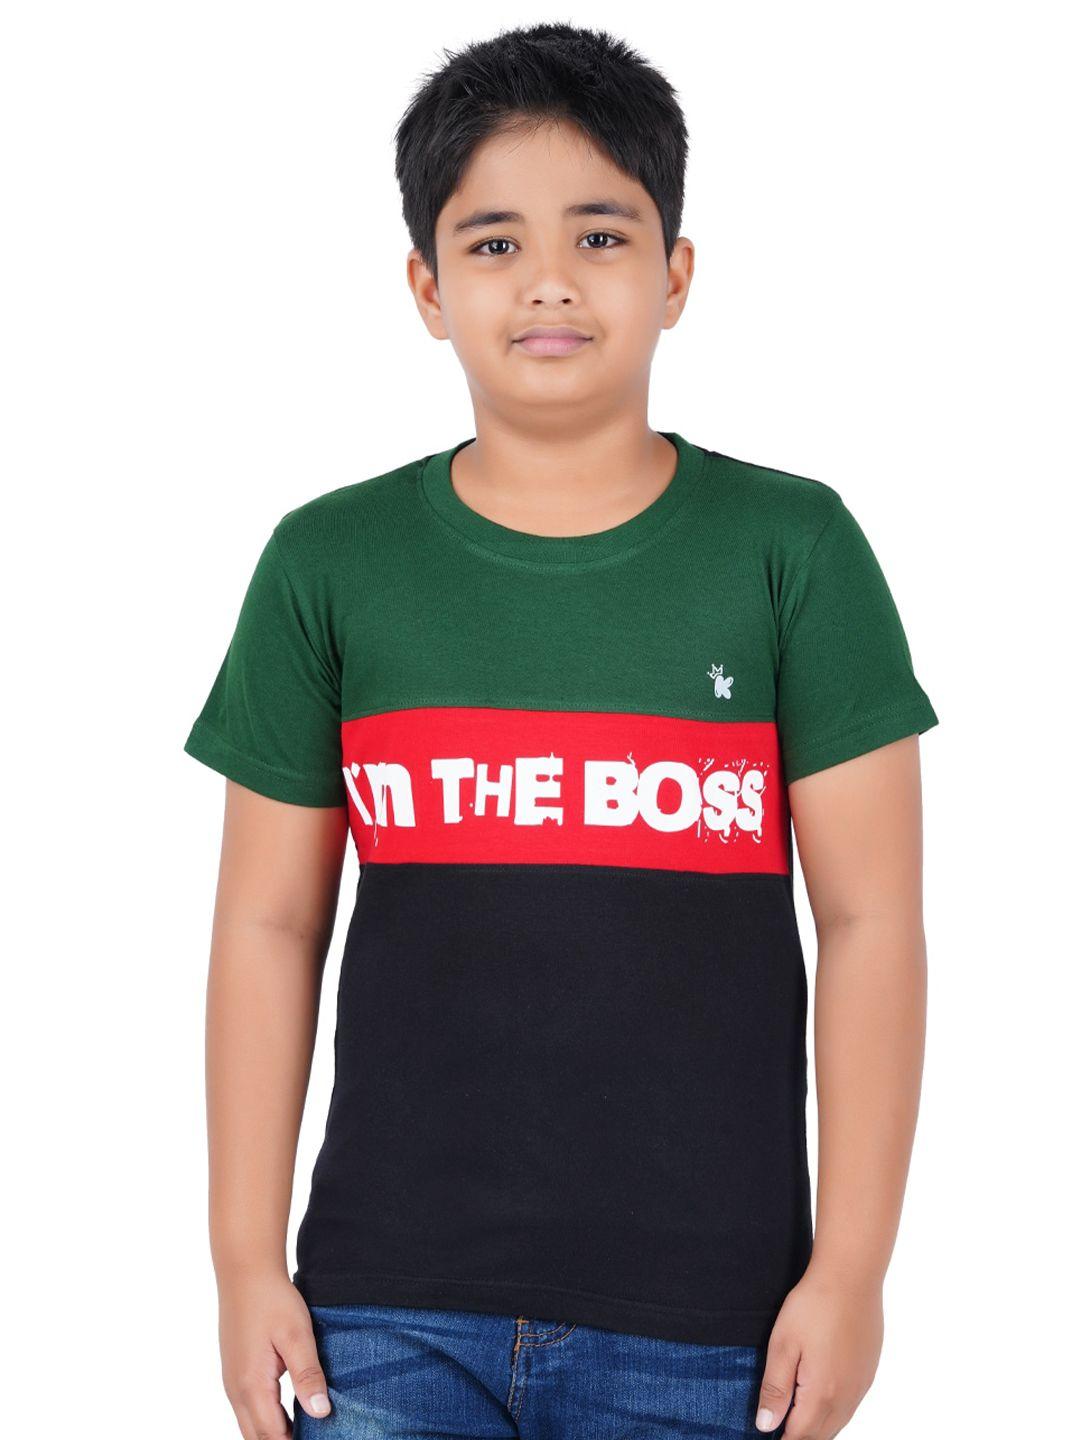 kiddeo boys green & black colourblocked slim fit t-shirt